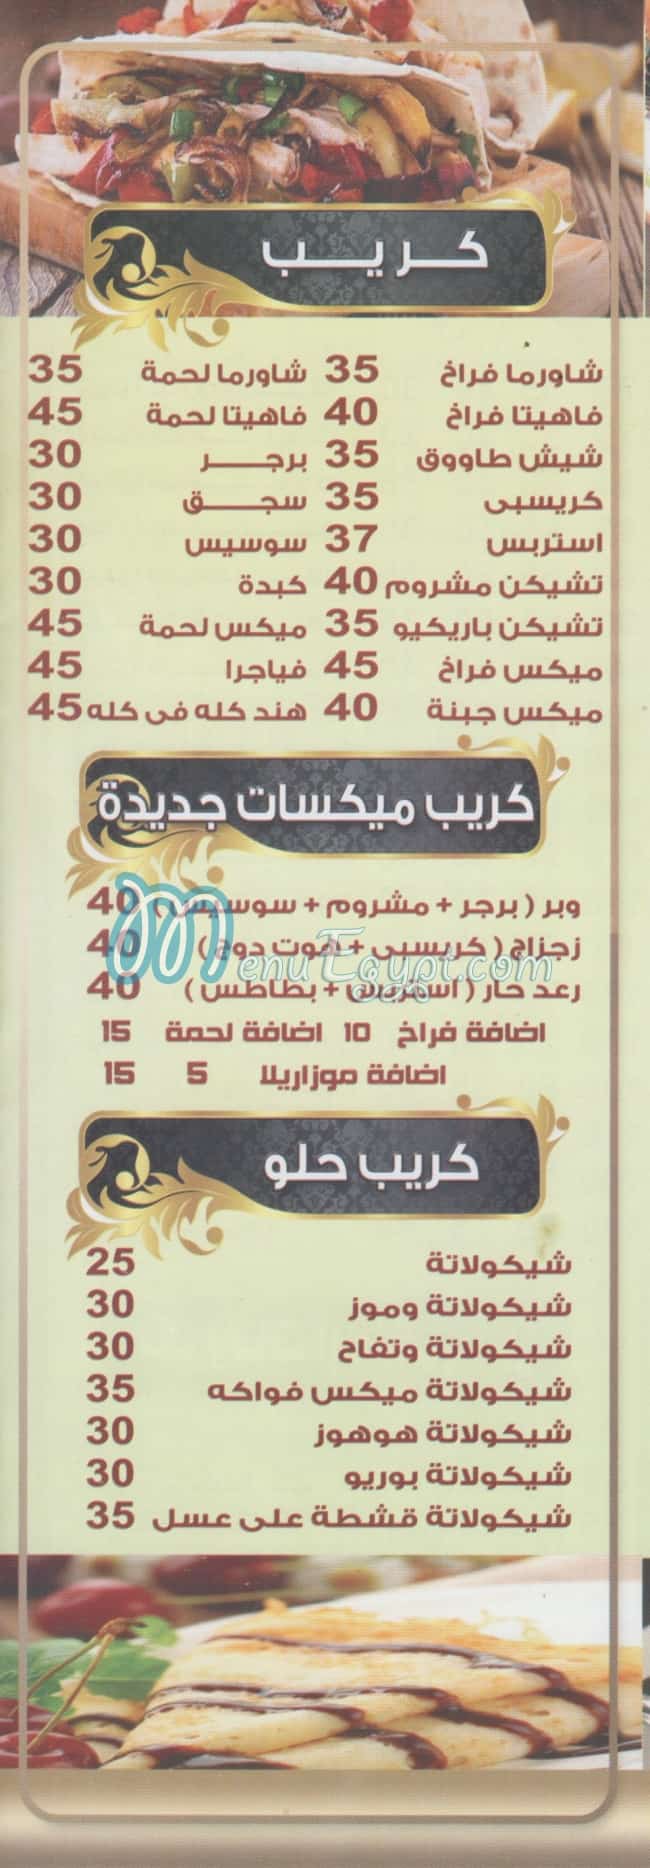 Koshary Hend El Maadi delivery menu